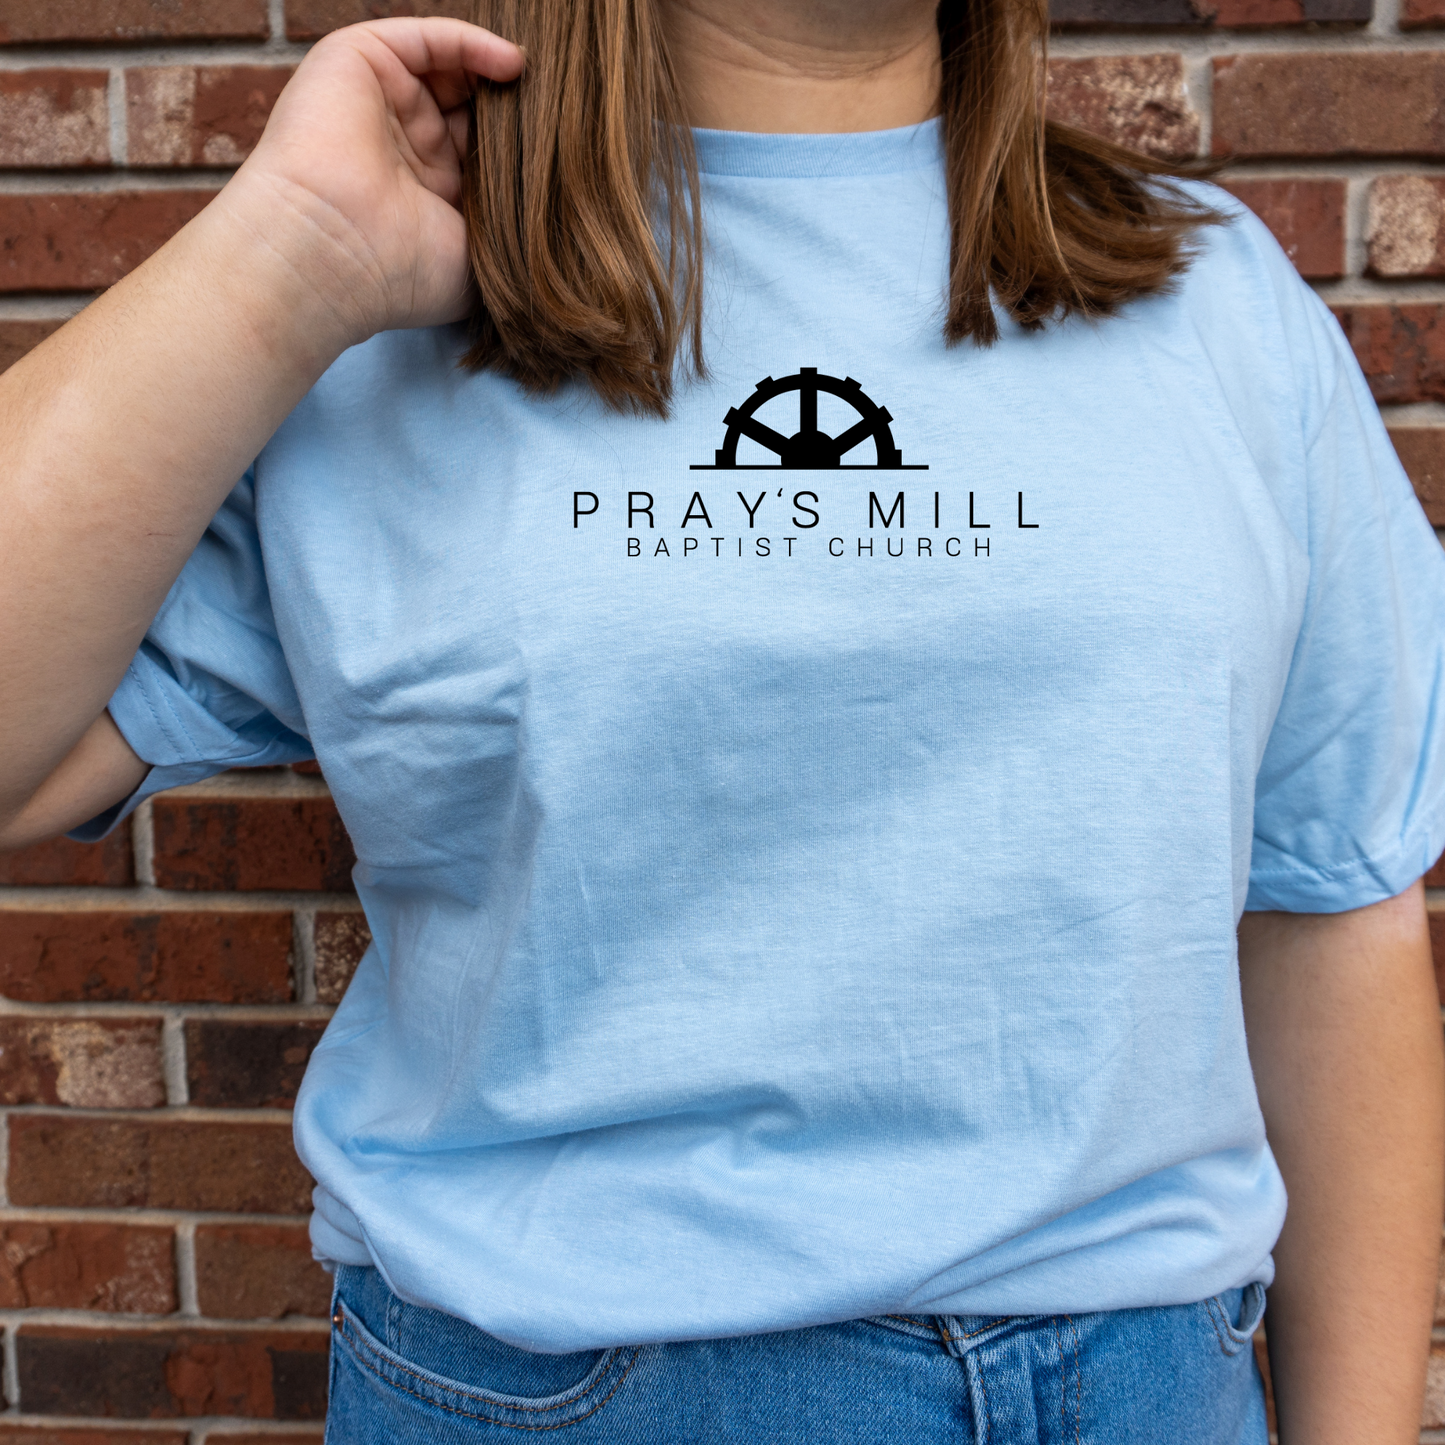 Pray's Mill Baptist Church T-Shirt